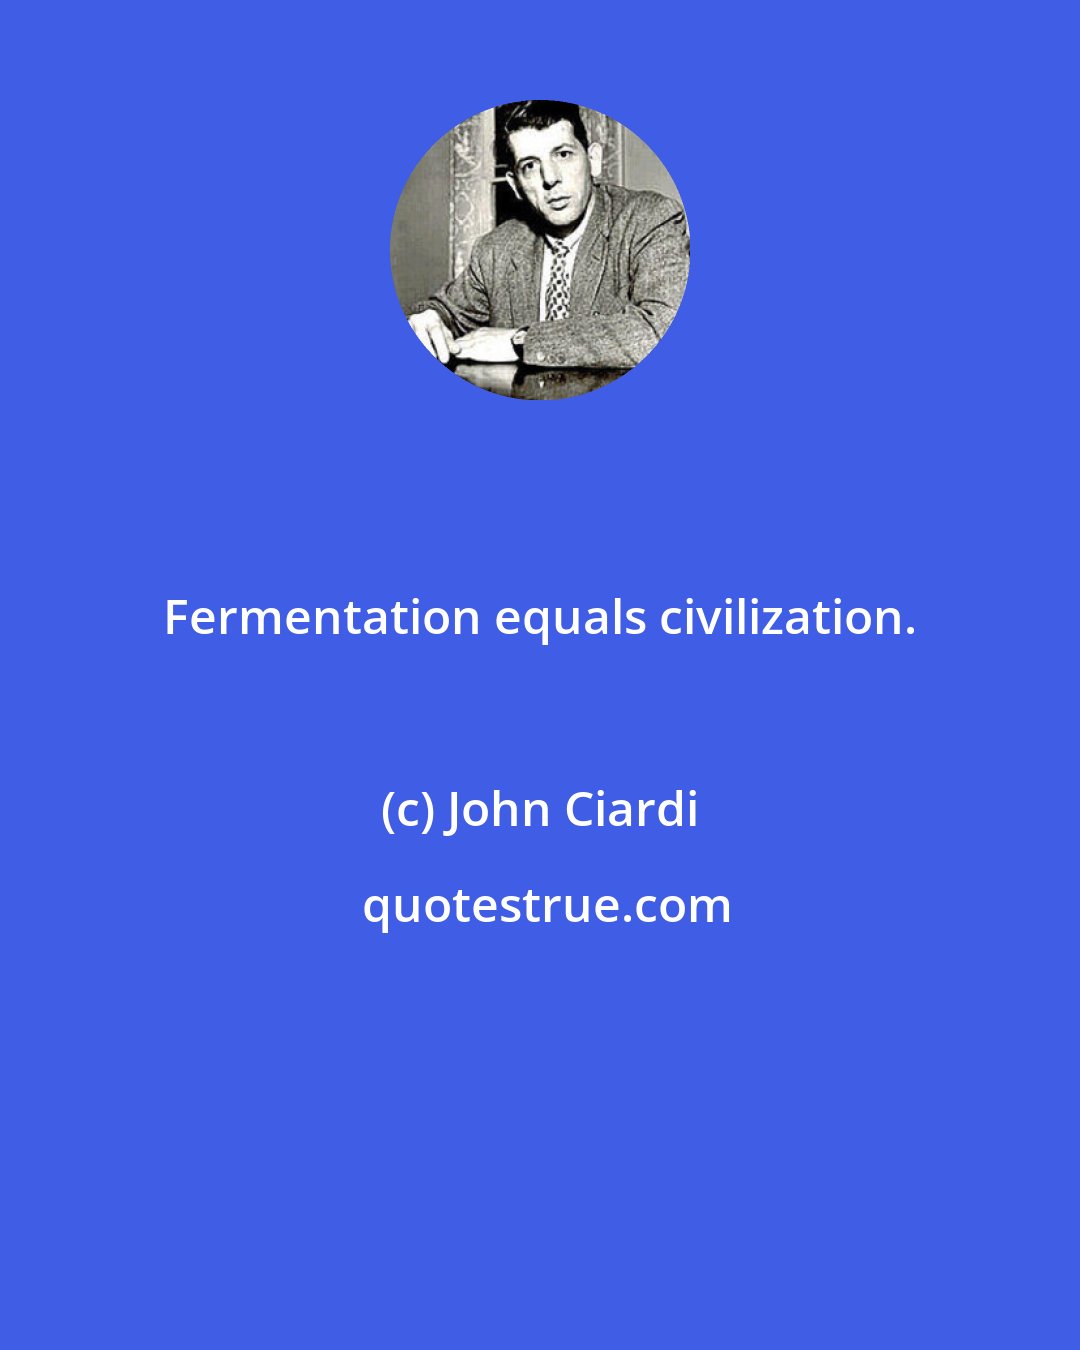 John Ciardi: Fermentation equals civilization.